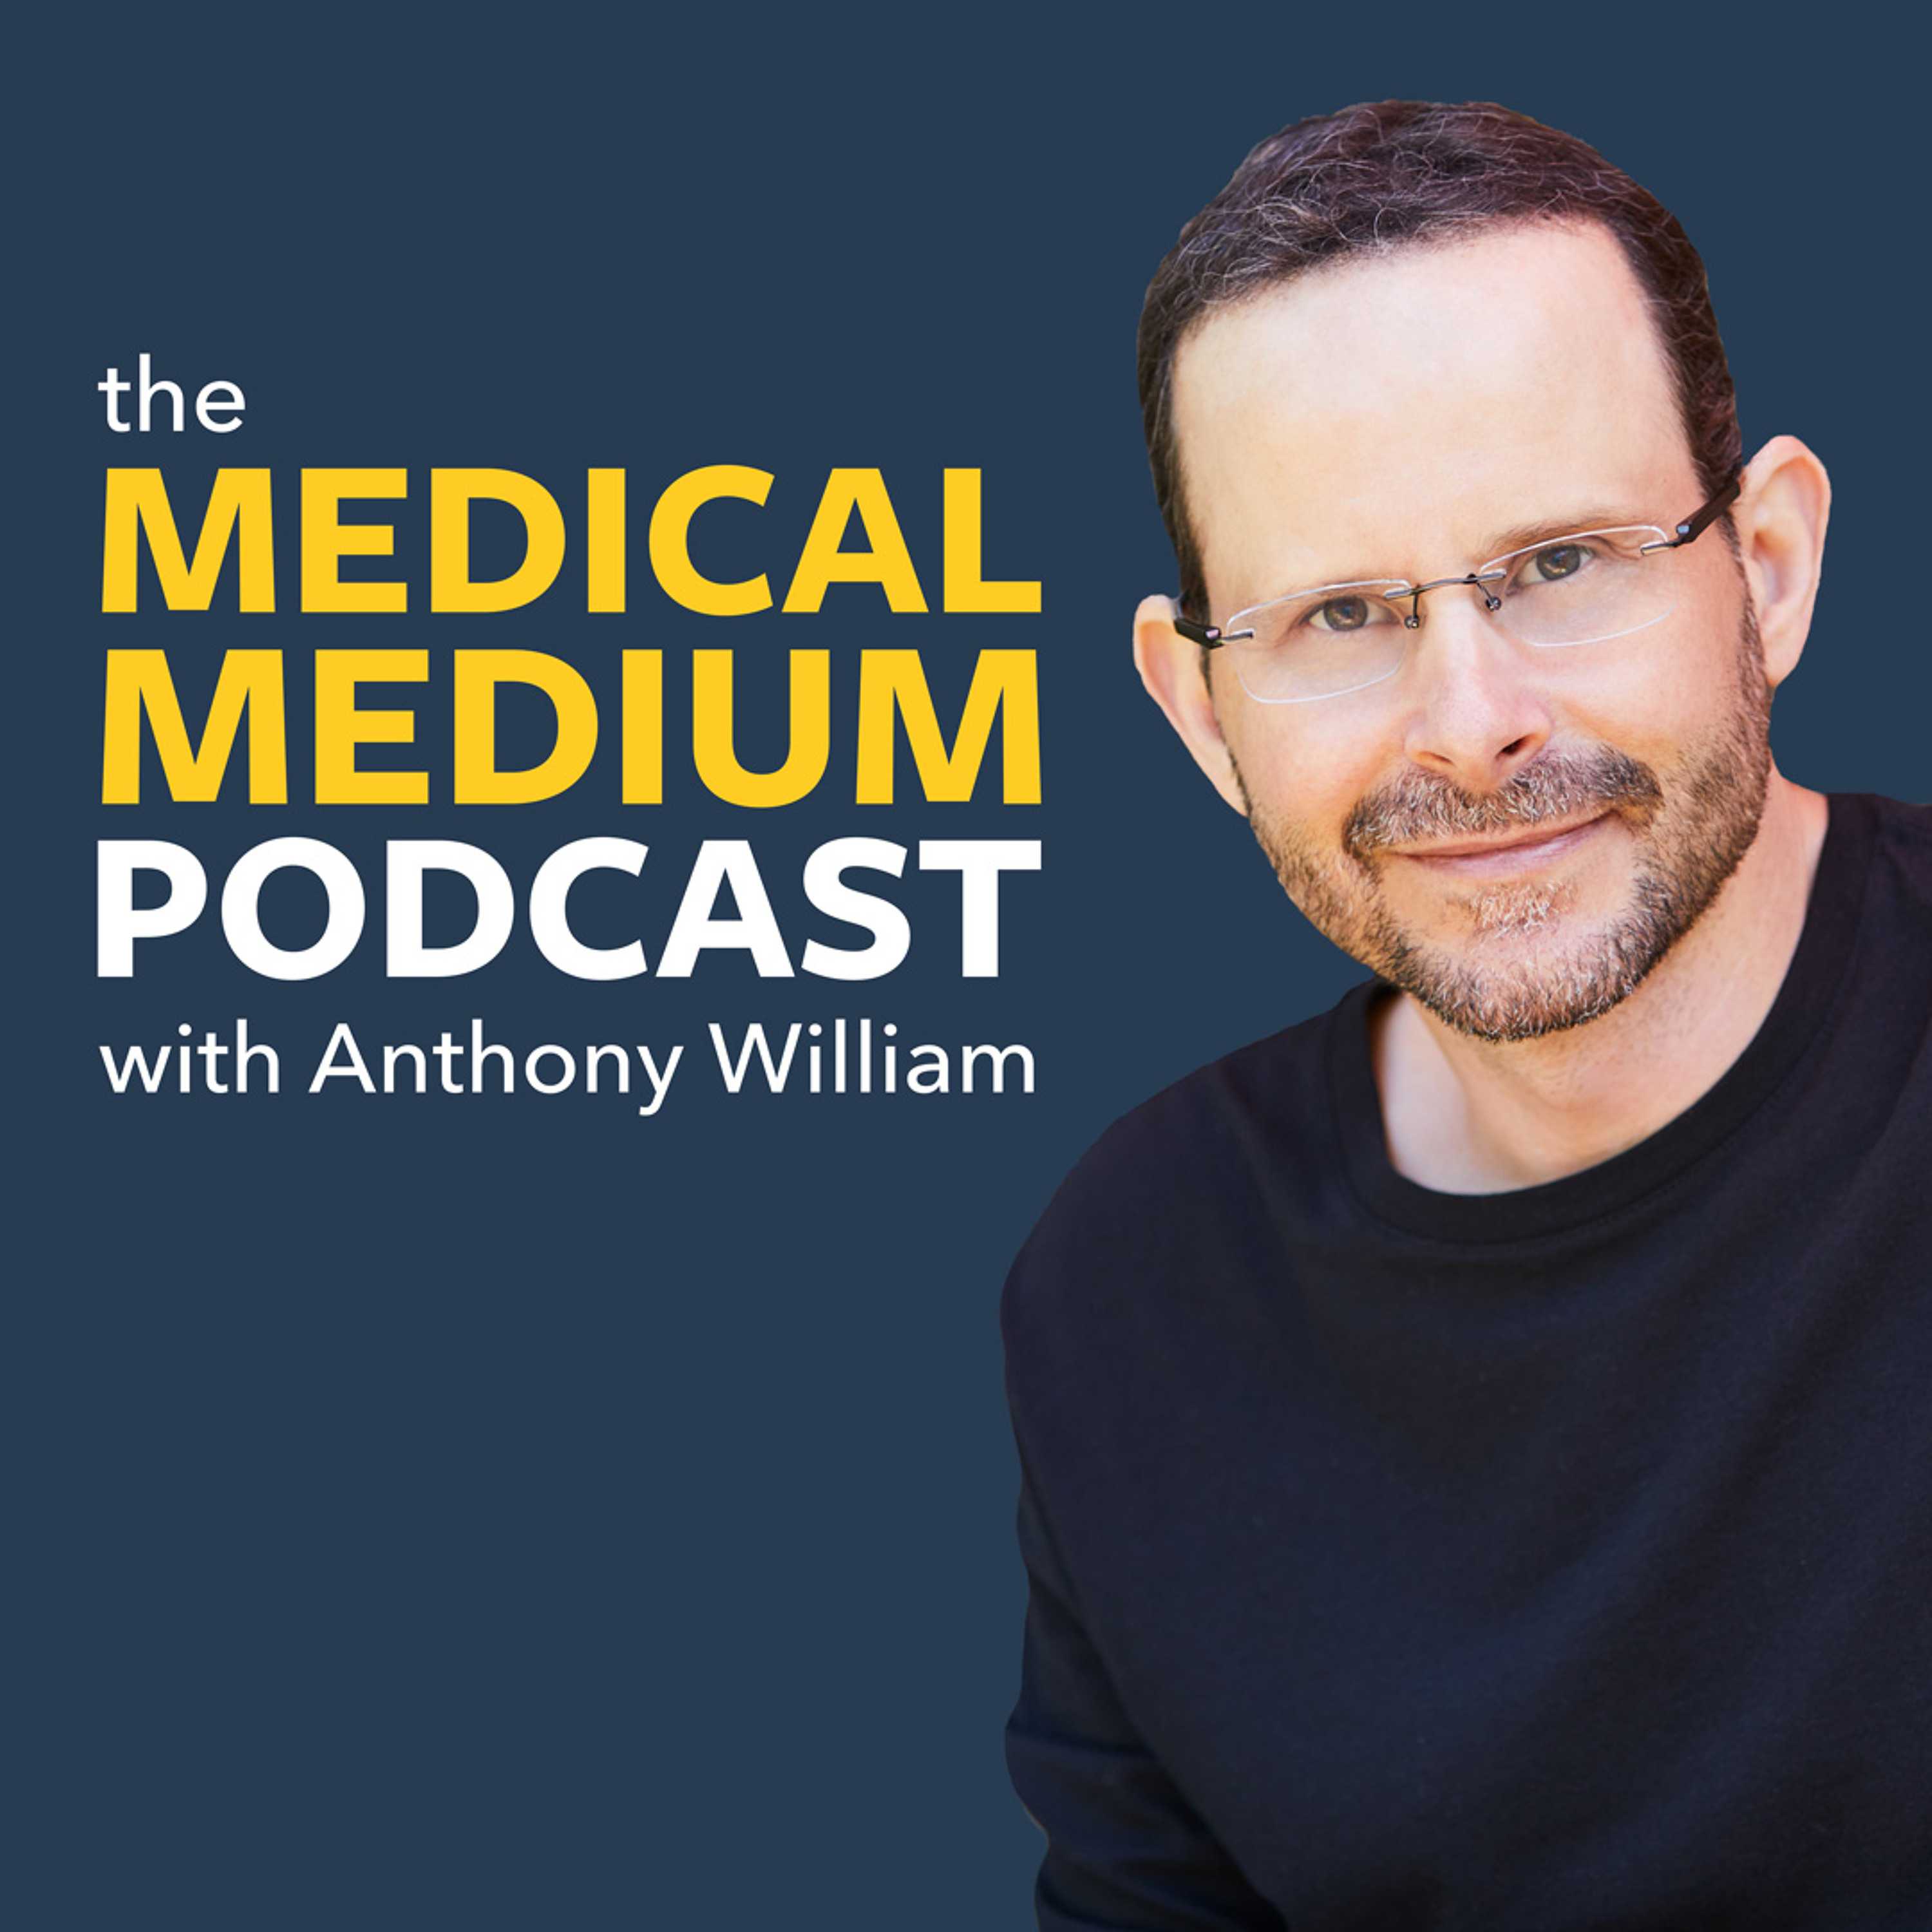 000 Medical Medium Podcast: Welcome